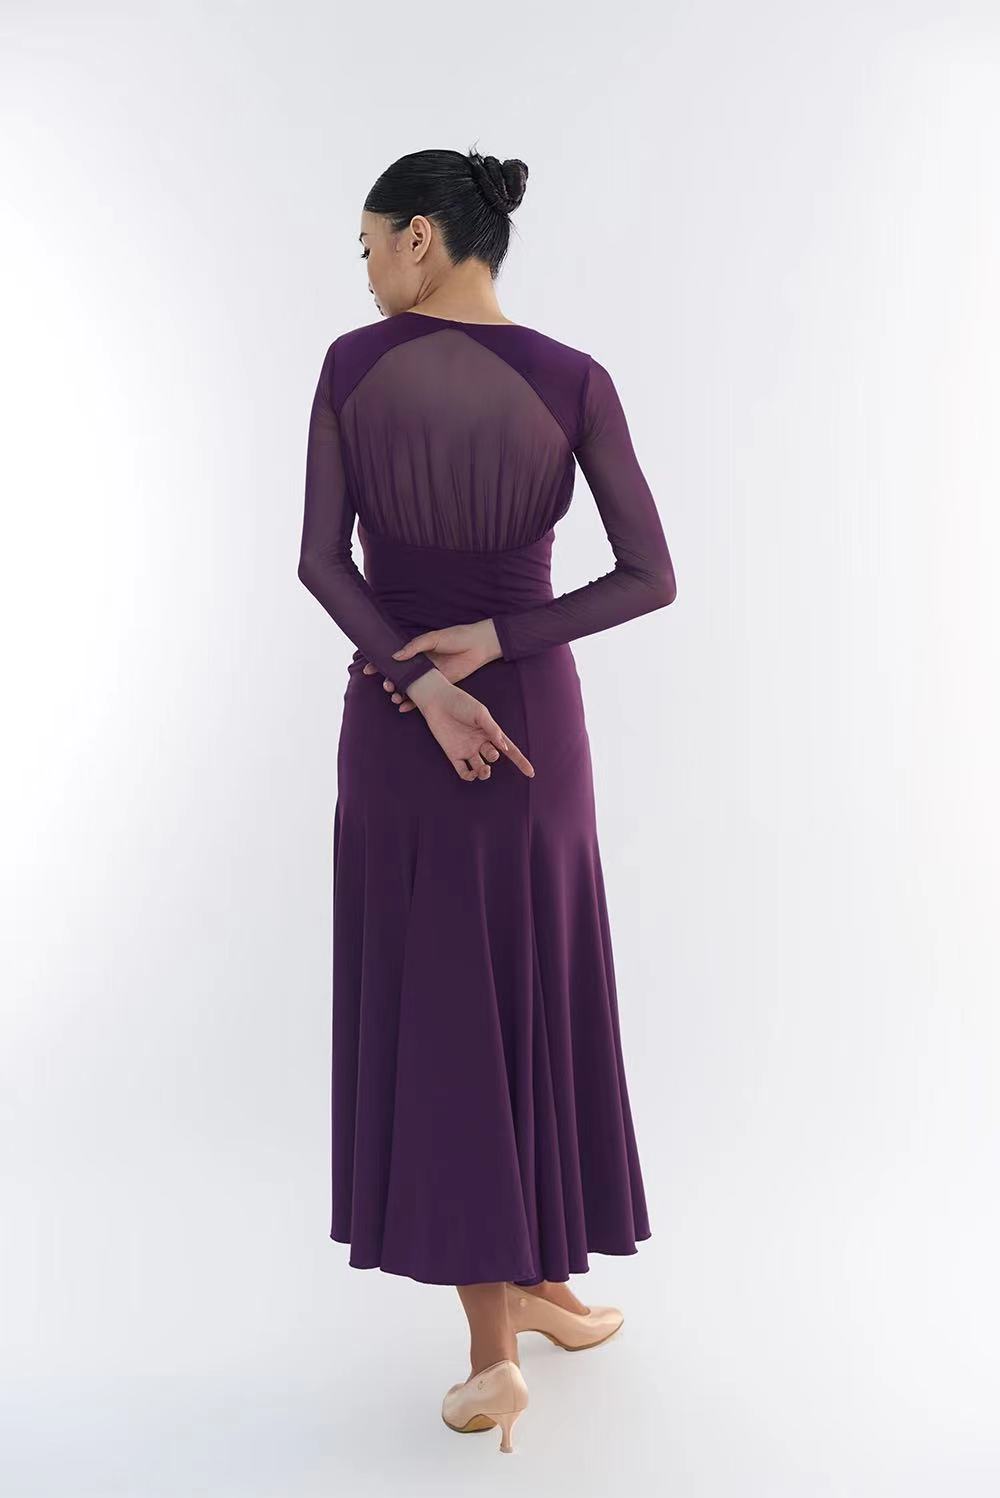 DANCE QUEEN 581-2 Tailor Made Dark Purple Dress